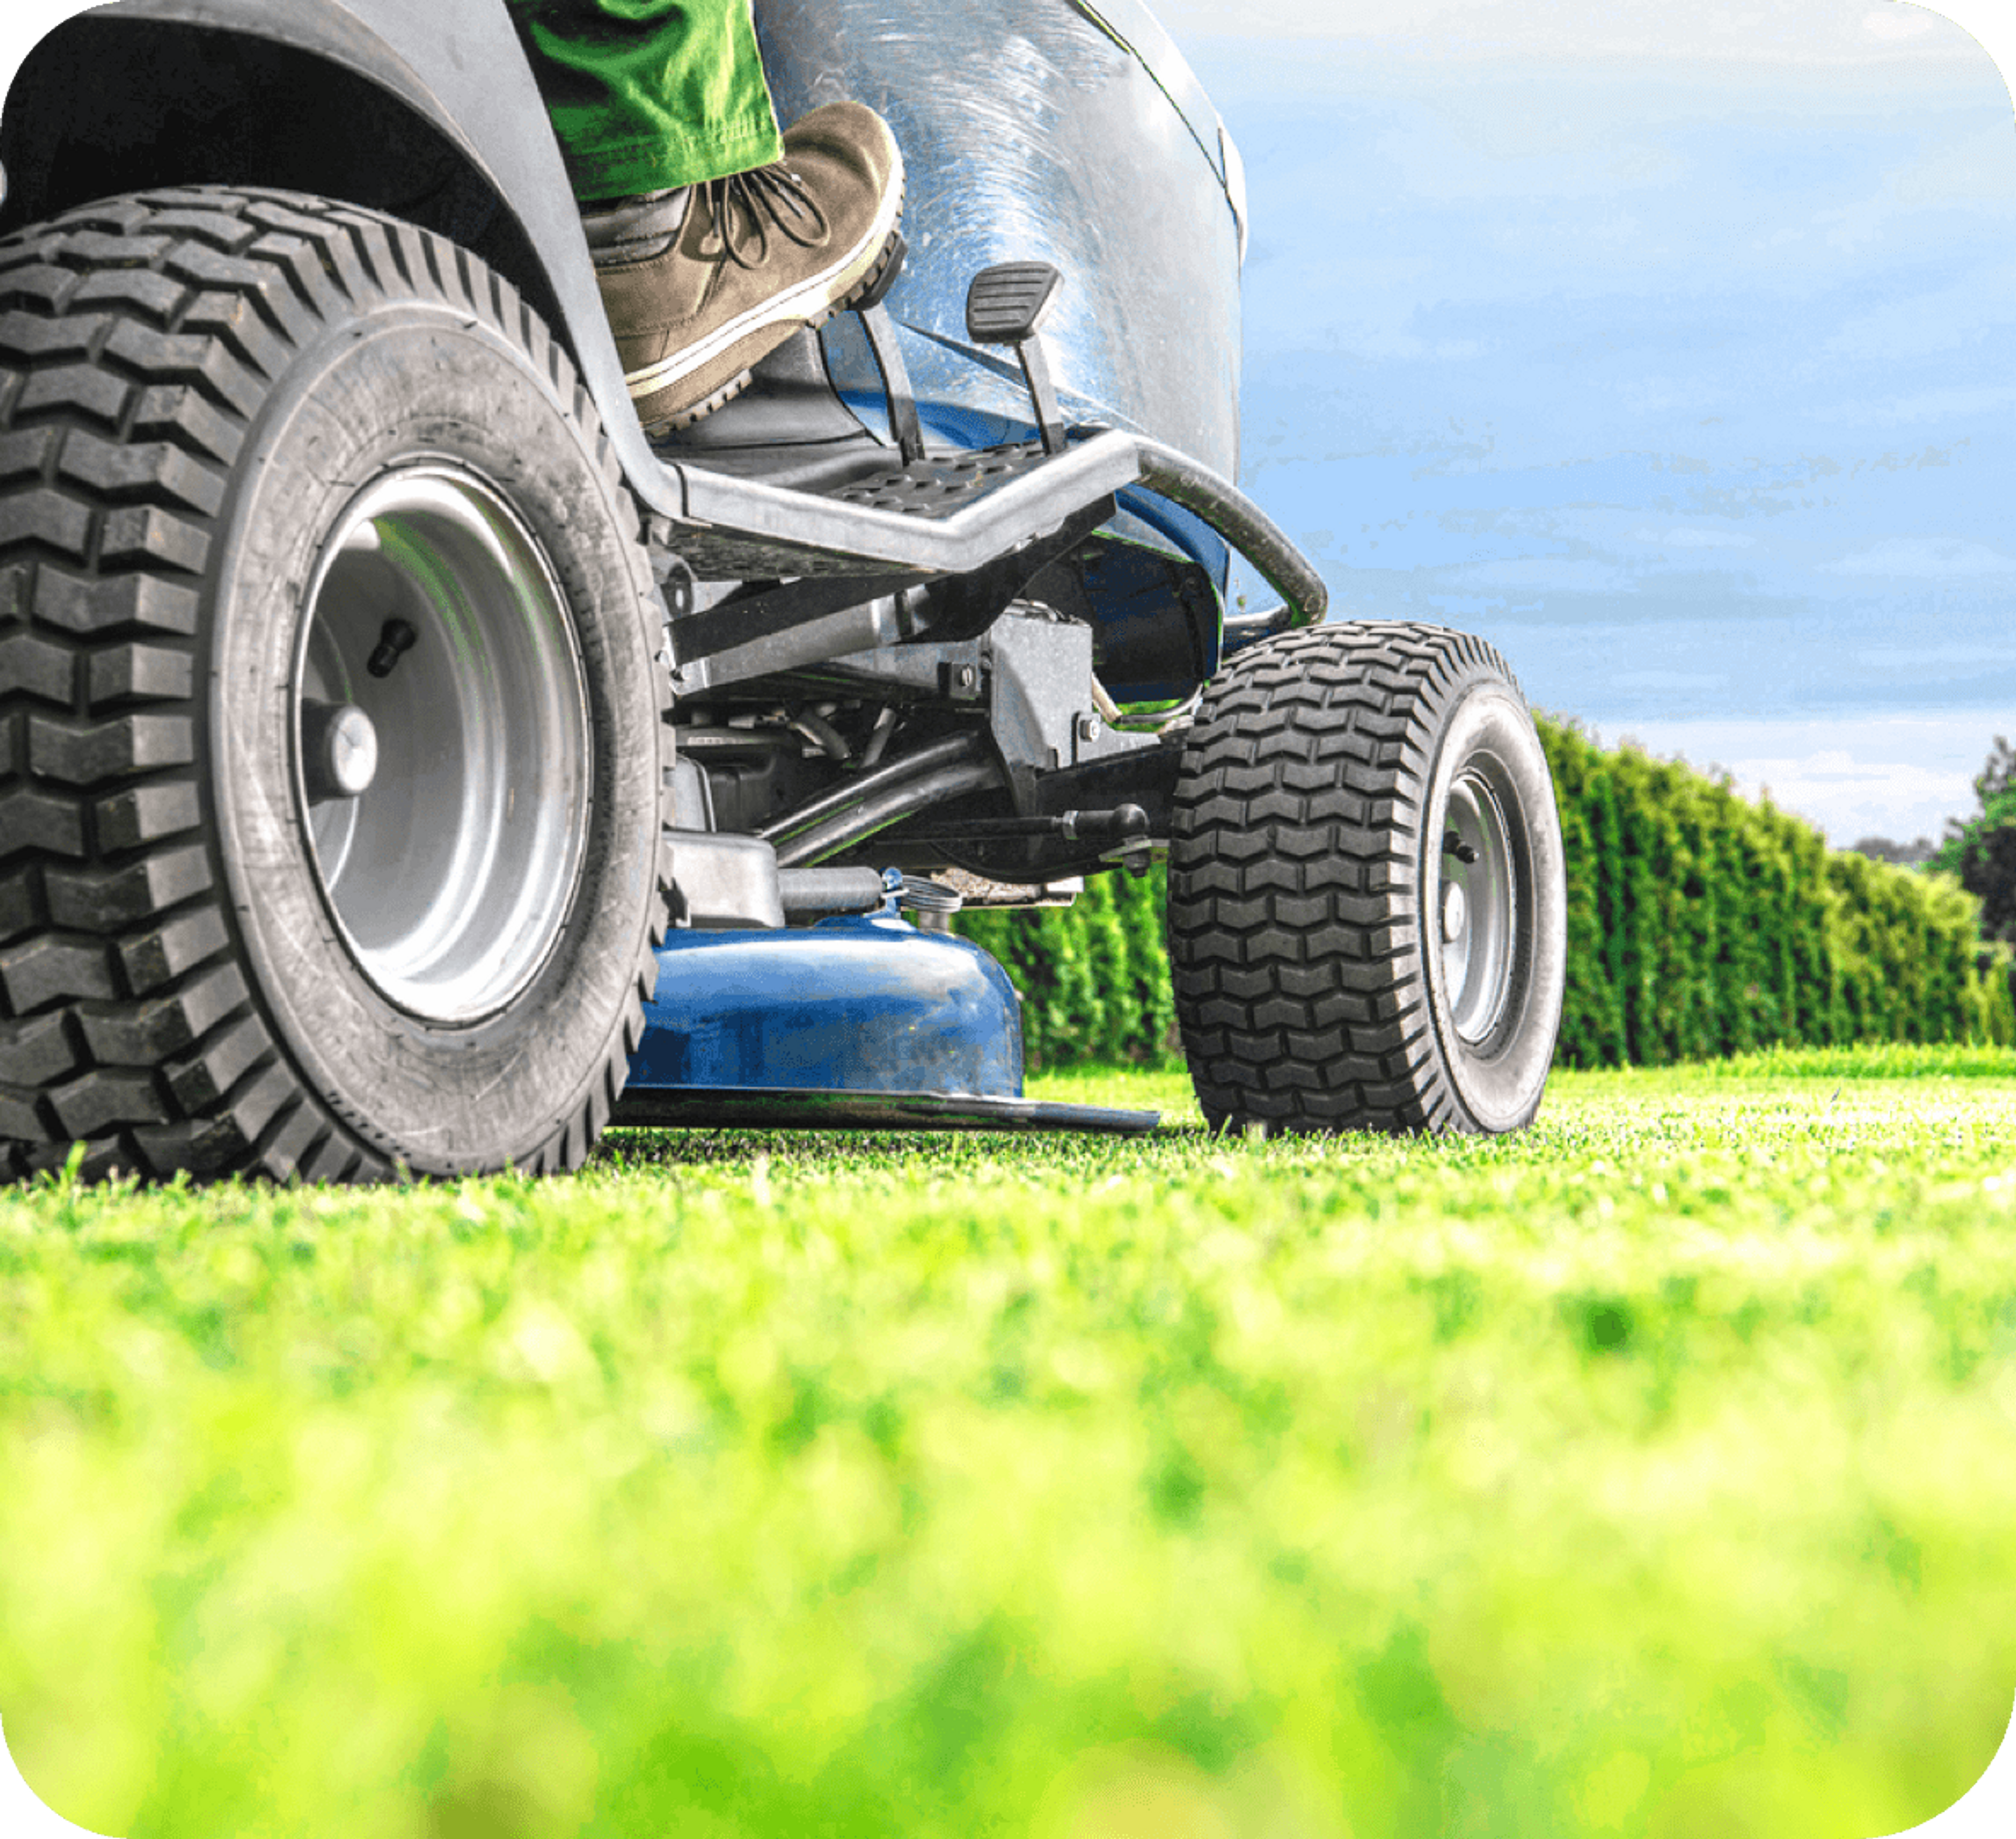 Closeup of lawn mower on grass